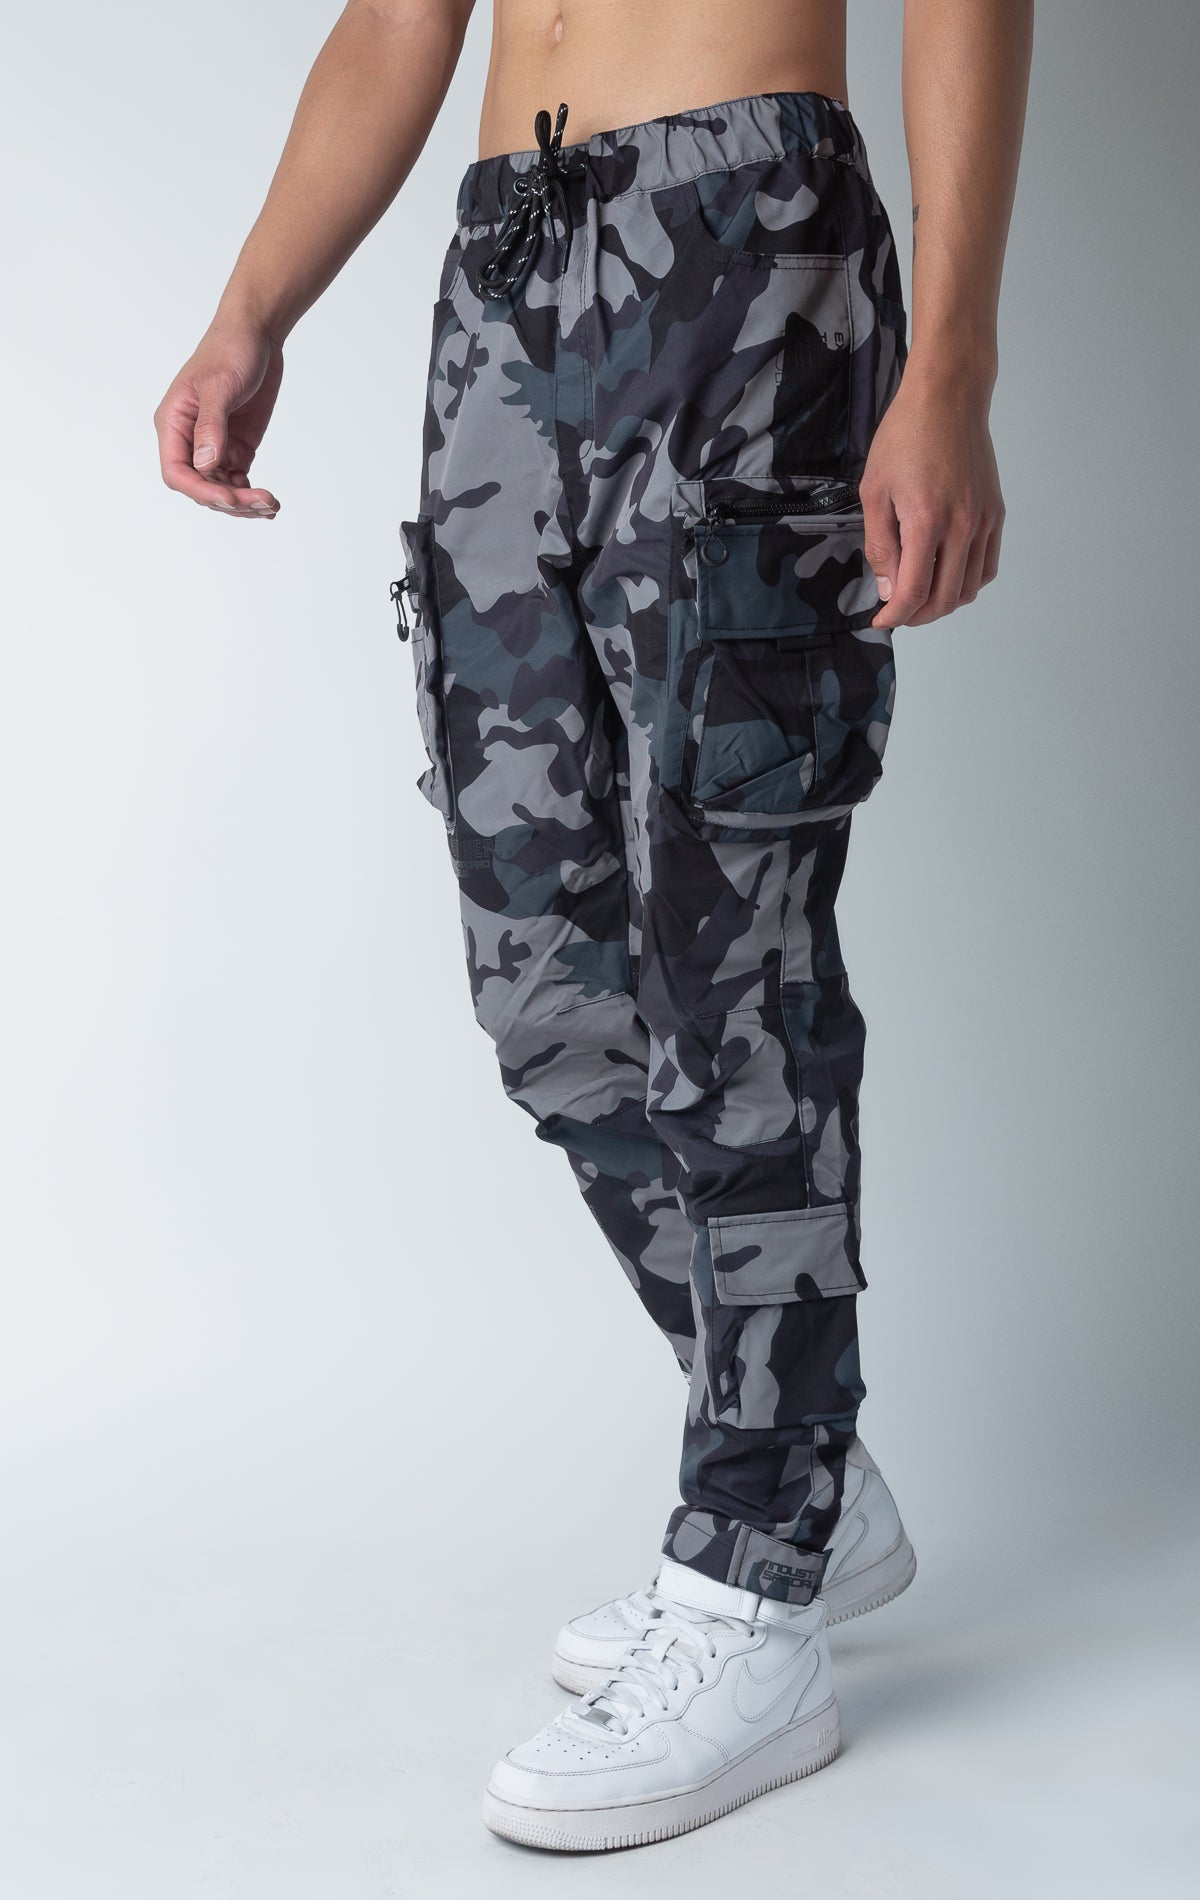 Camo windbreaker utility pants, sleek fit with an open bottom jogger style